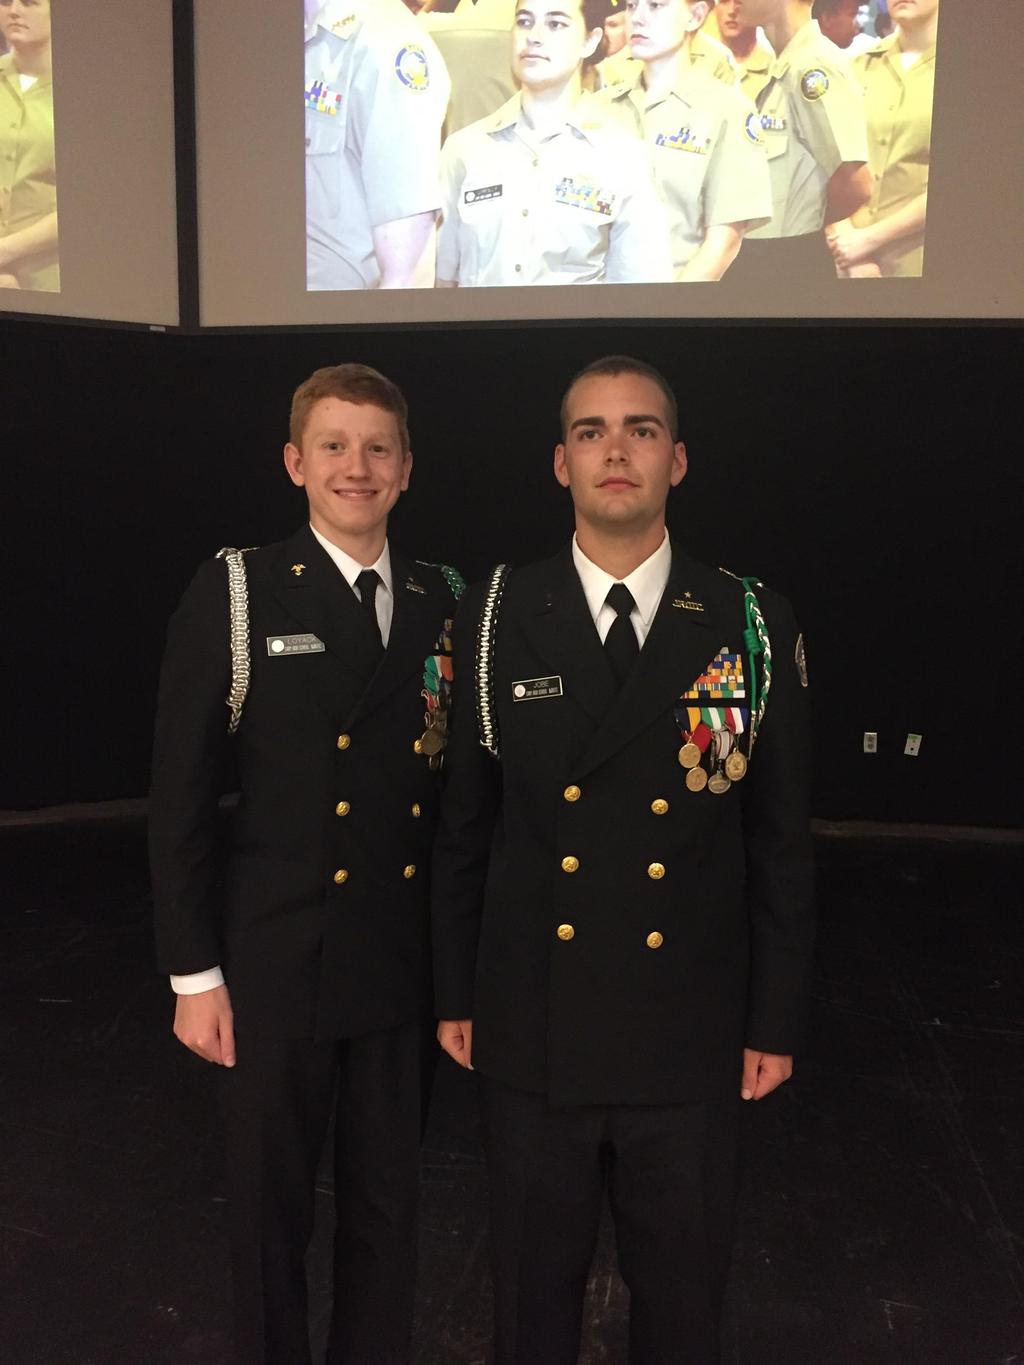 Words From CO and XO Cadet Lieutenant Zachary Jobe and Cadet Lieutenant Junior Grade Charlie Loyack A.M.I. was outstanding!